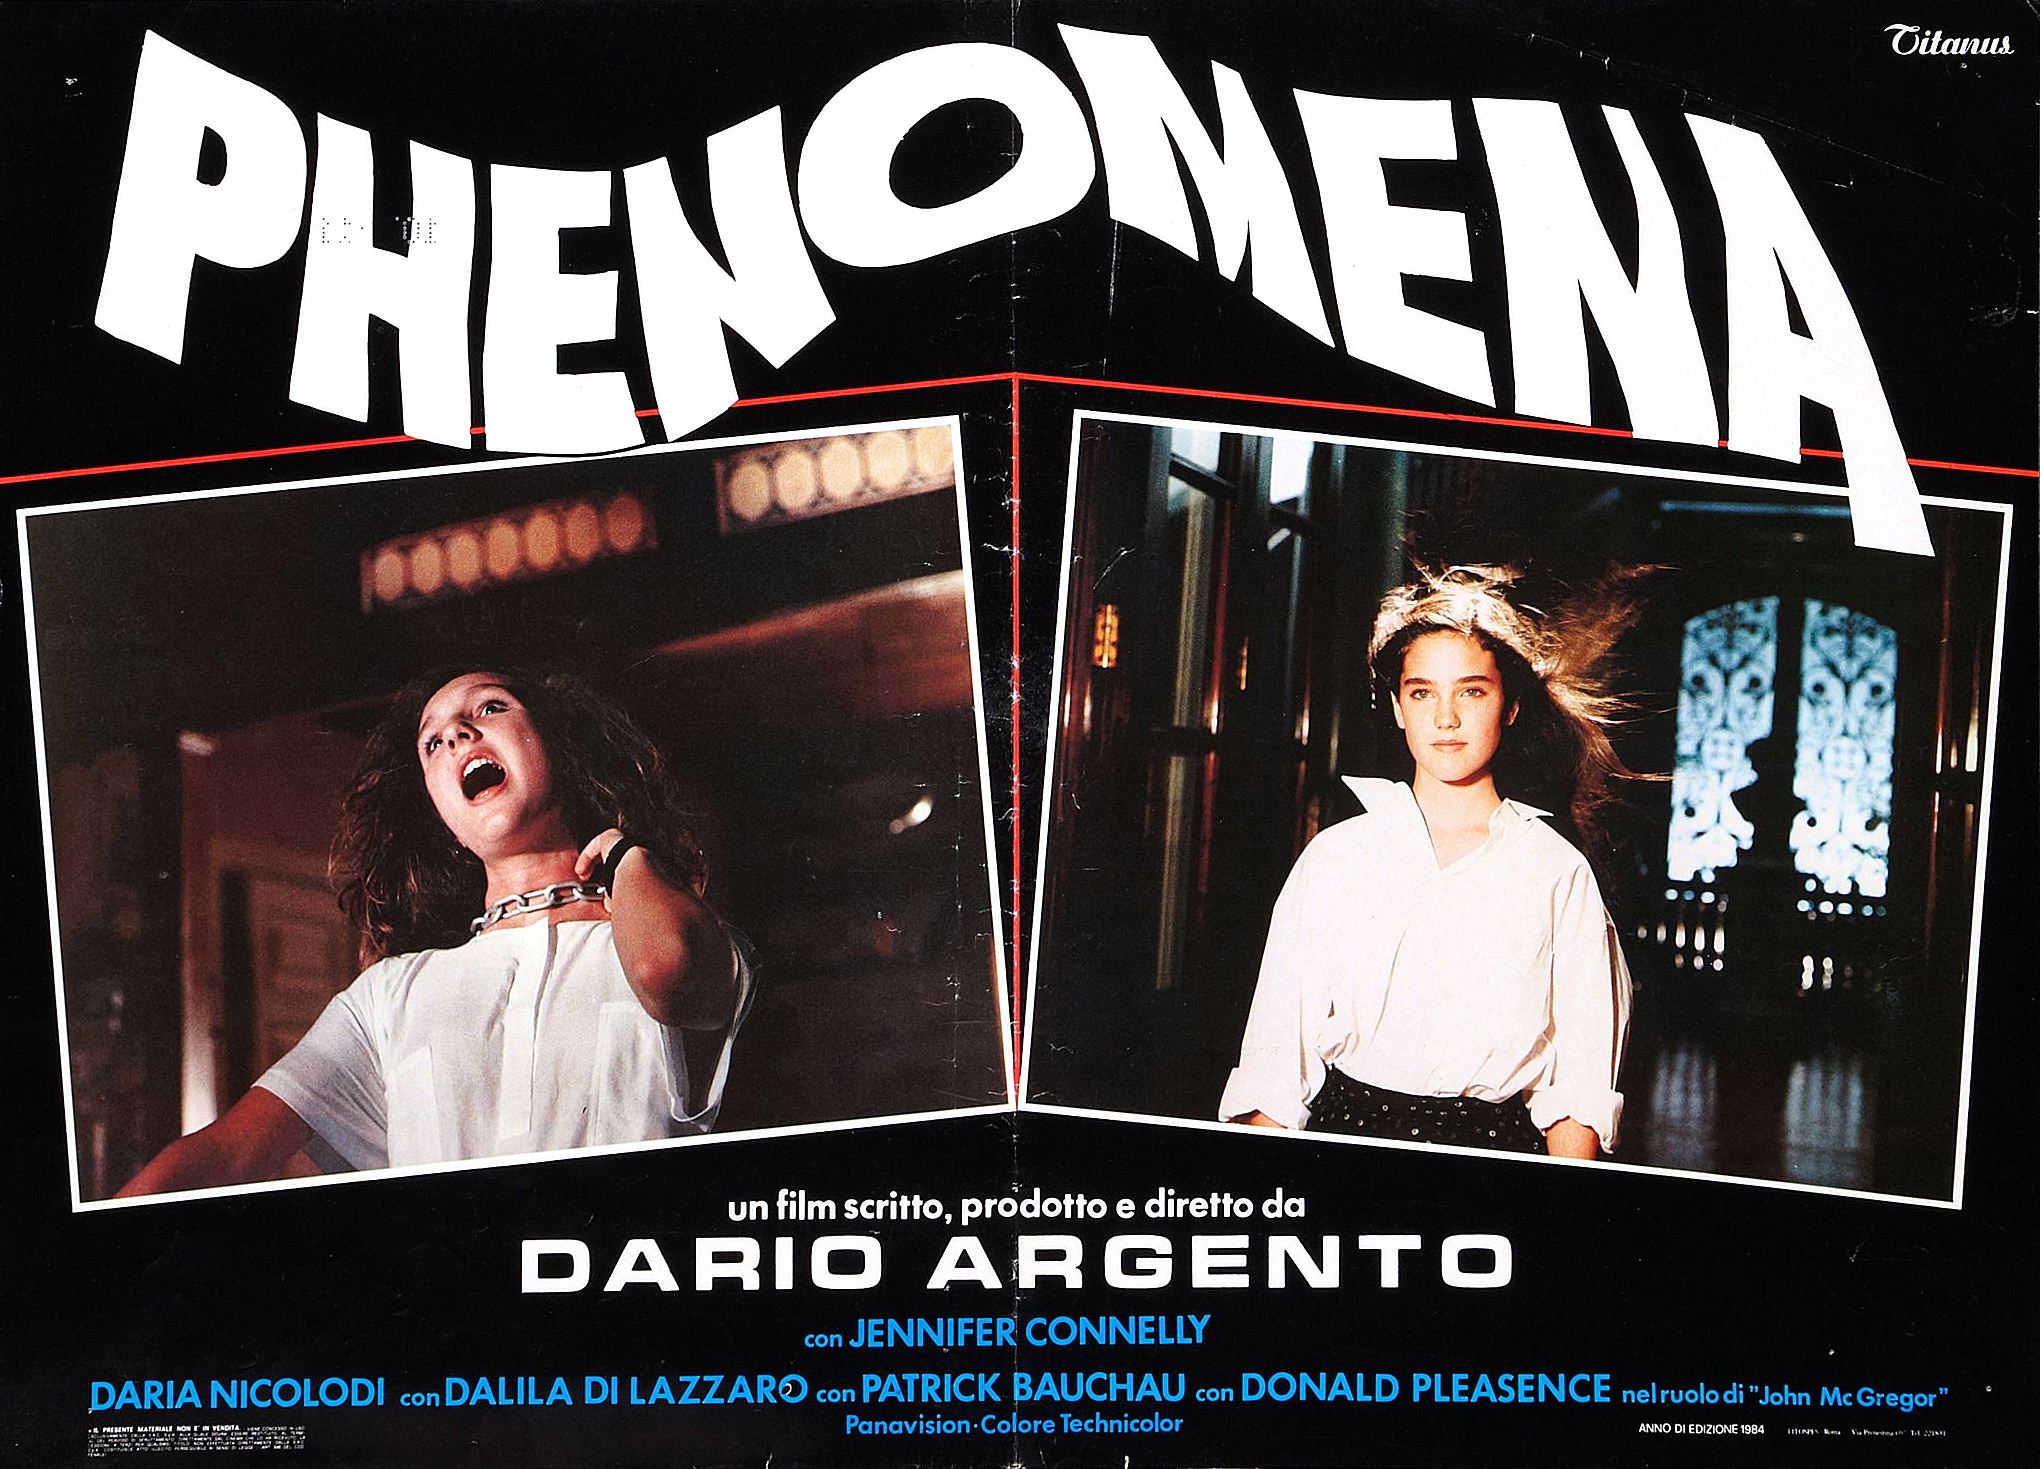 Dario Argento'nun Phenomena Galerisi 3 – phenomena fb 06